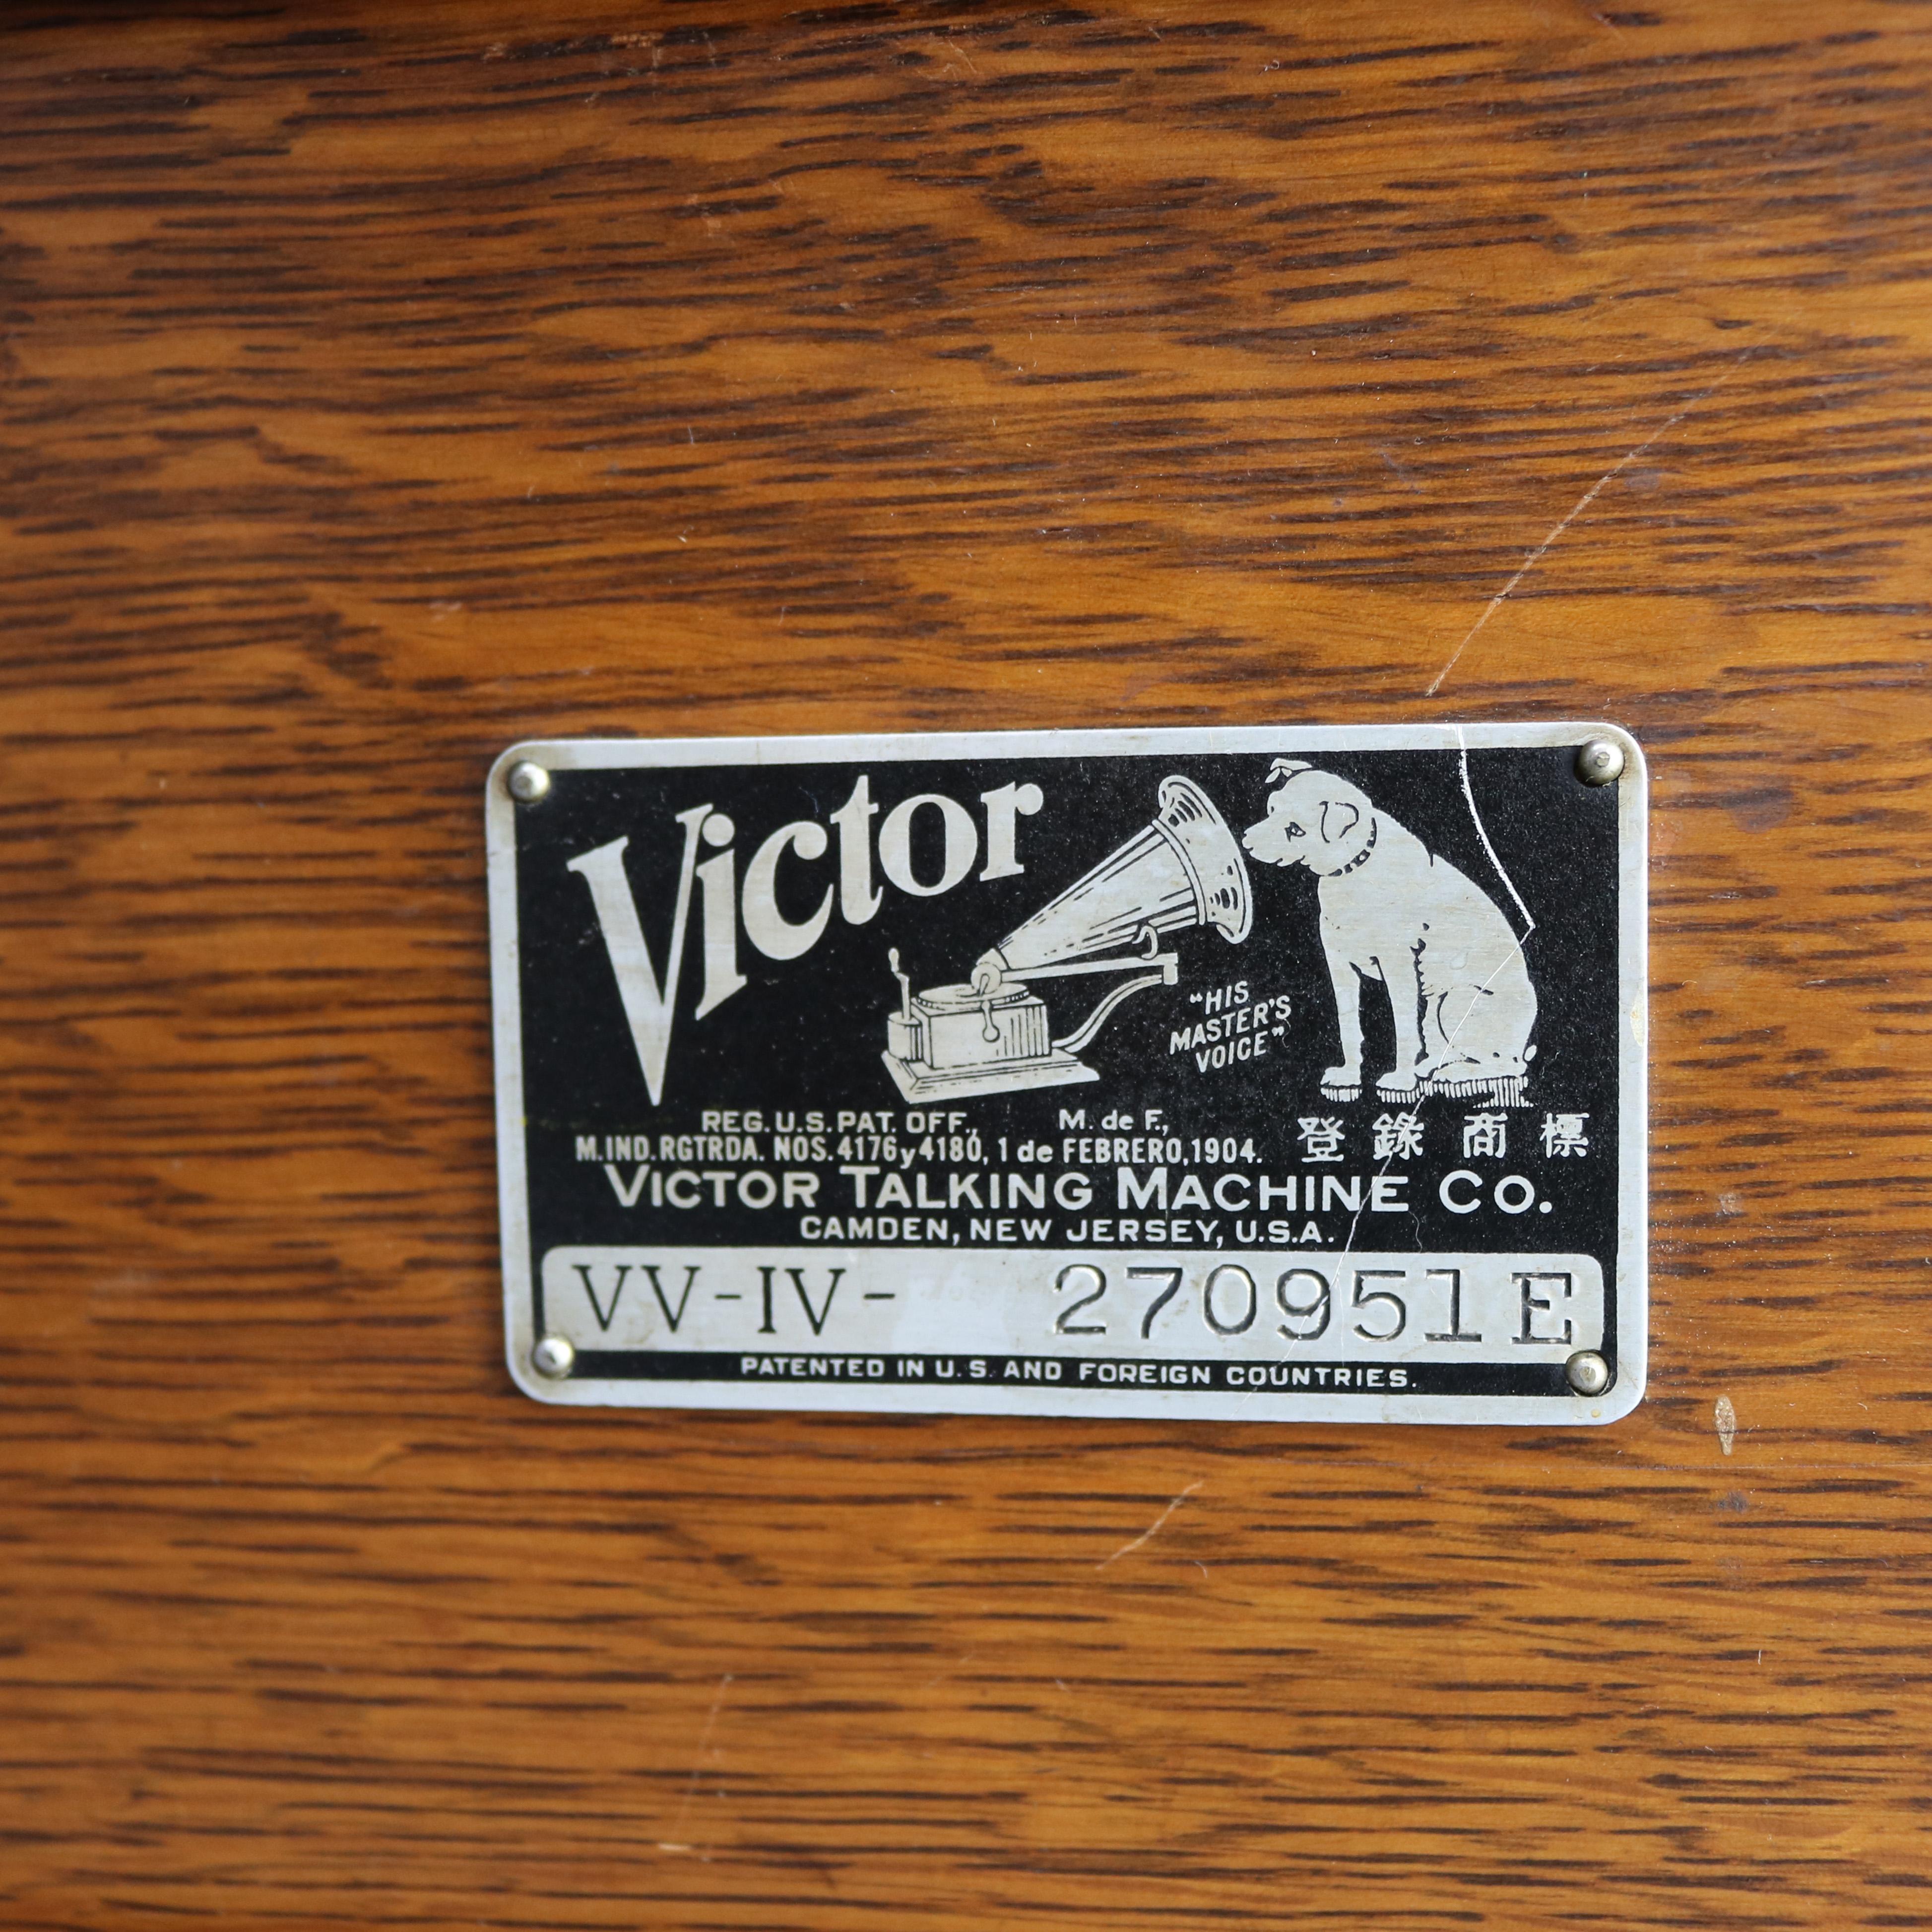 1900 victrola record player